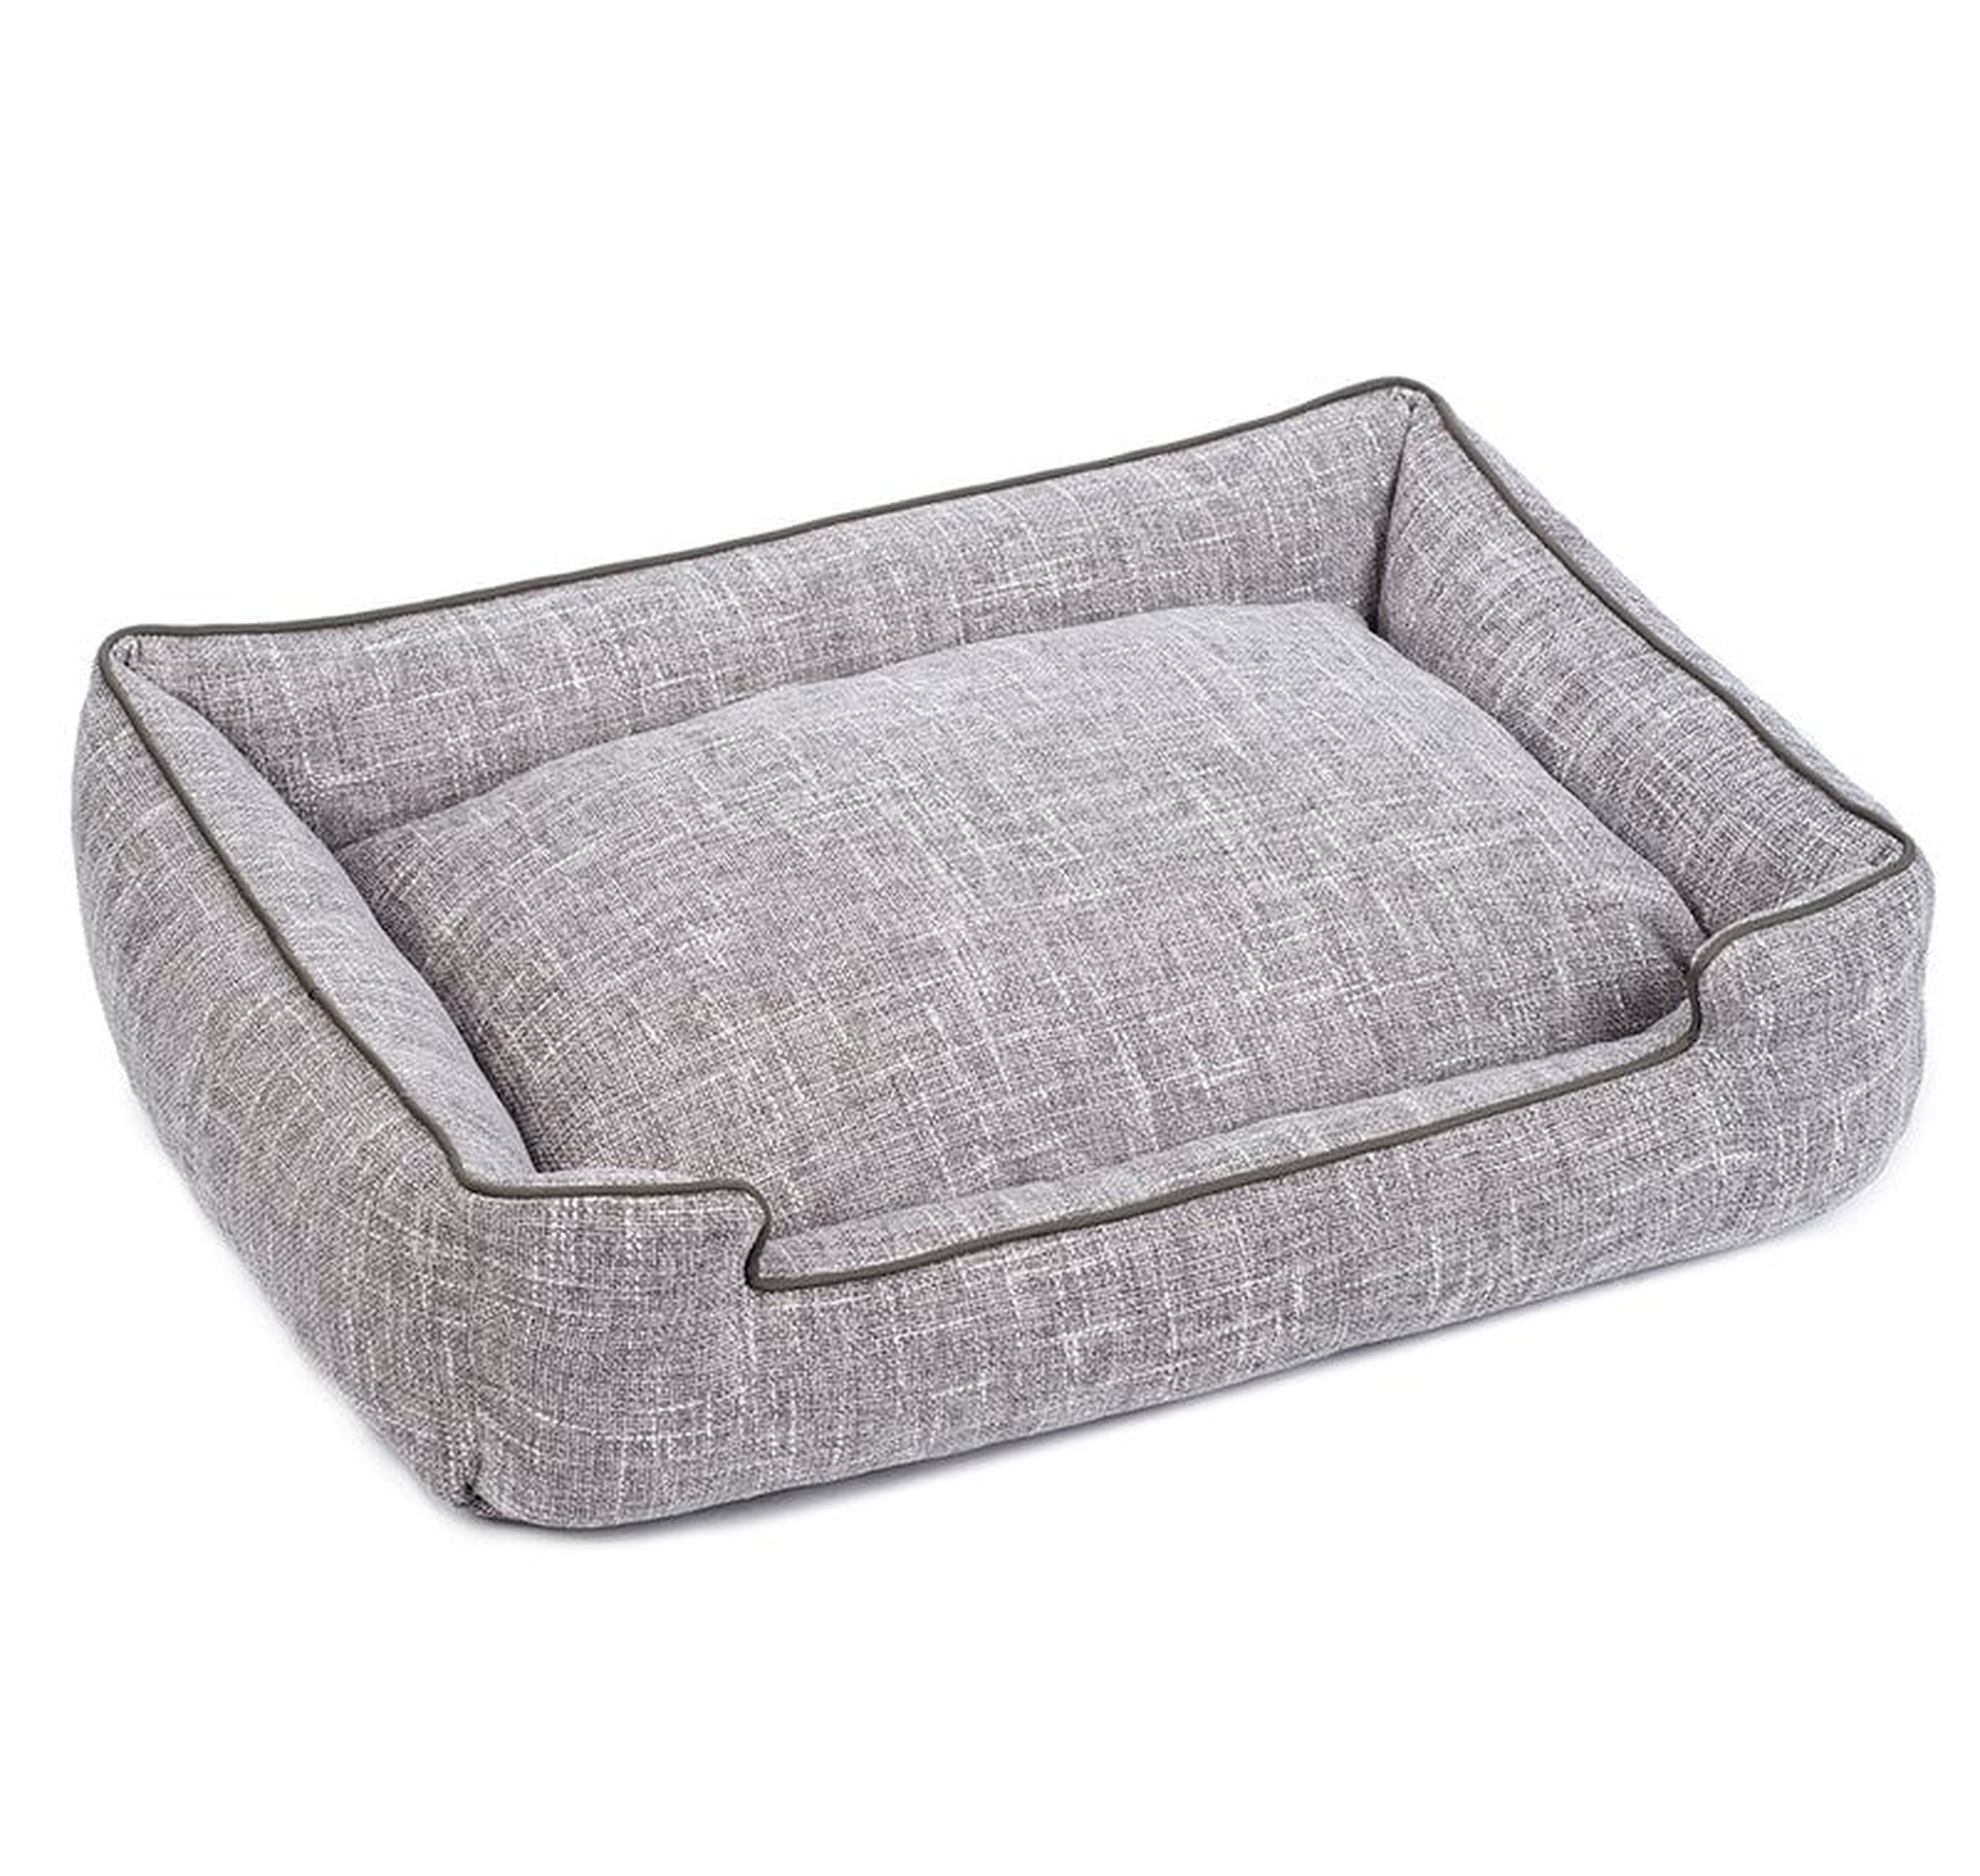 Harper Textured Woven Lounge Dog Bed - Gris, Large - Wayfair